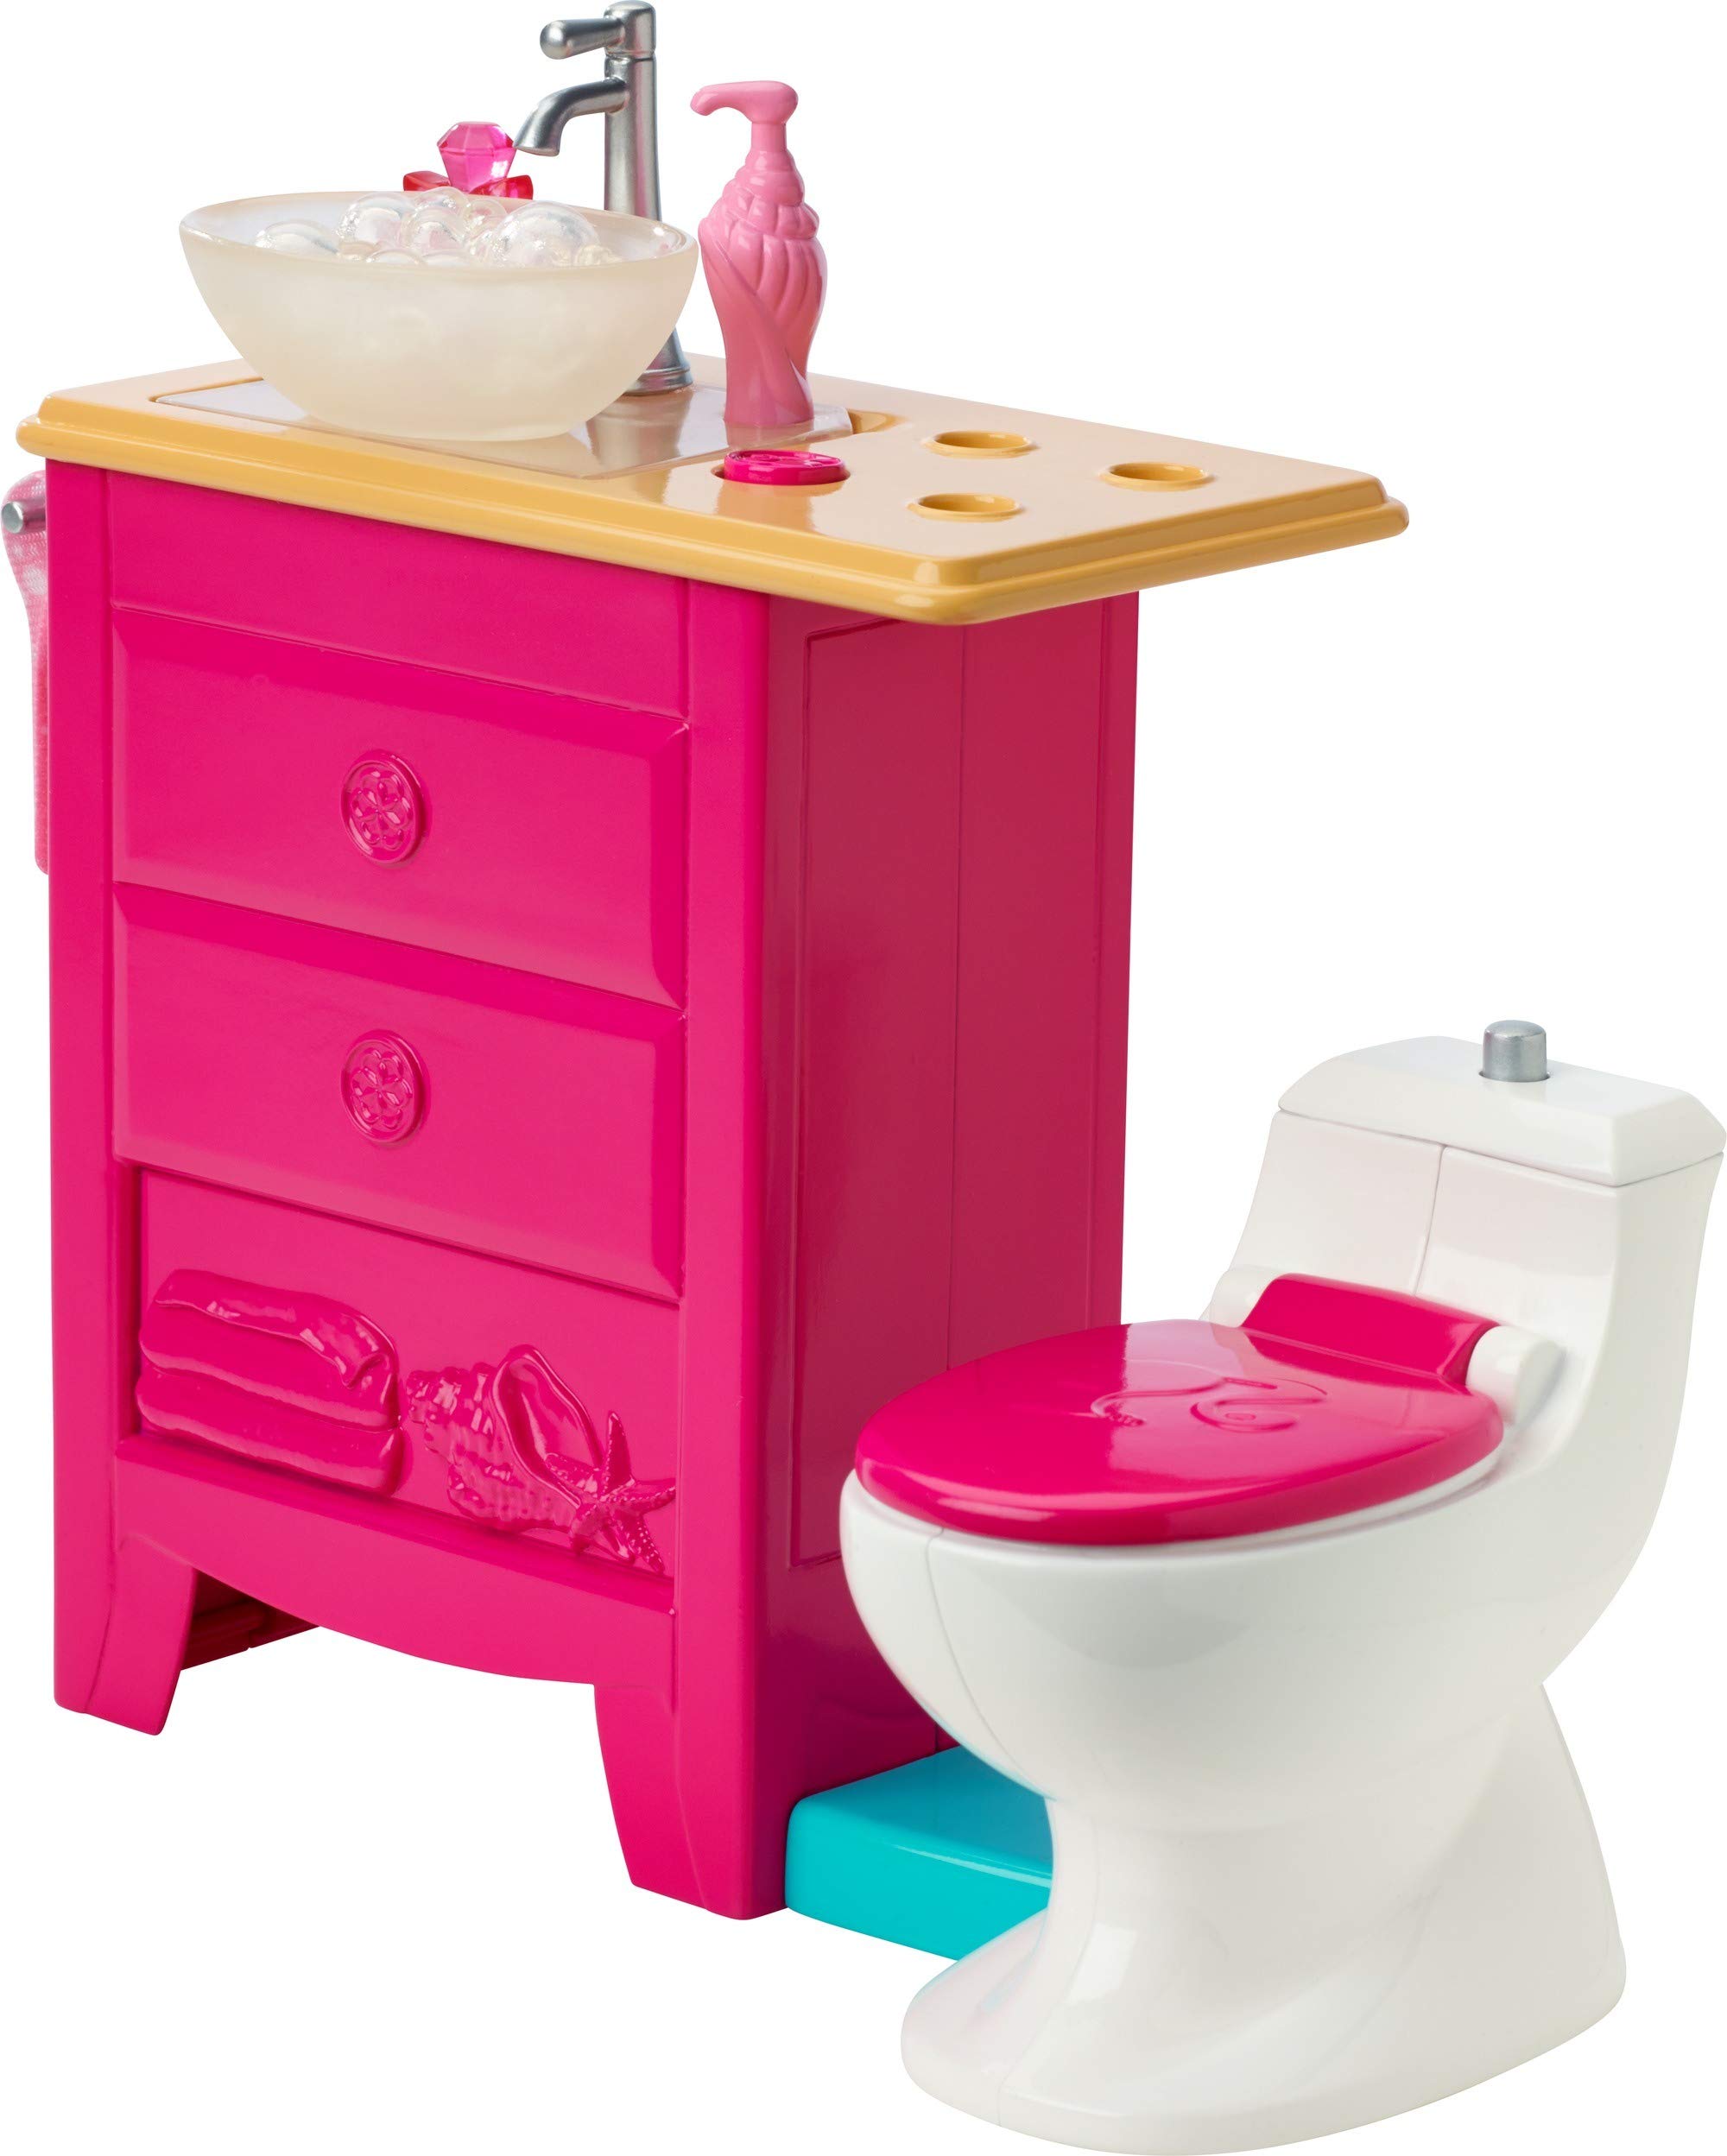 Barbie Dreamhouse [Amazon Exclusive], Pink